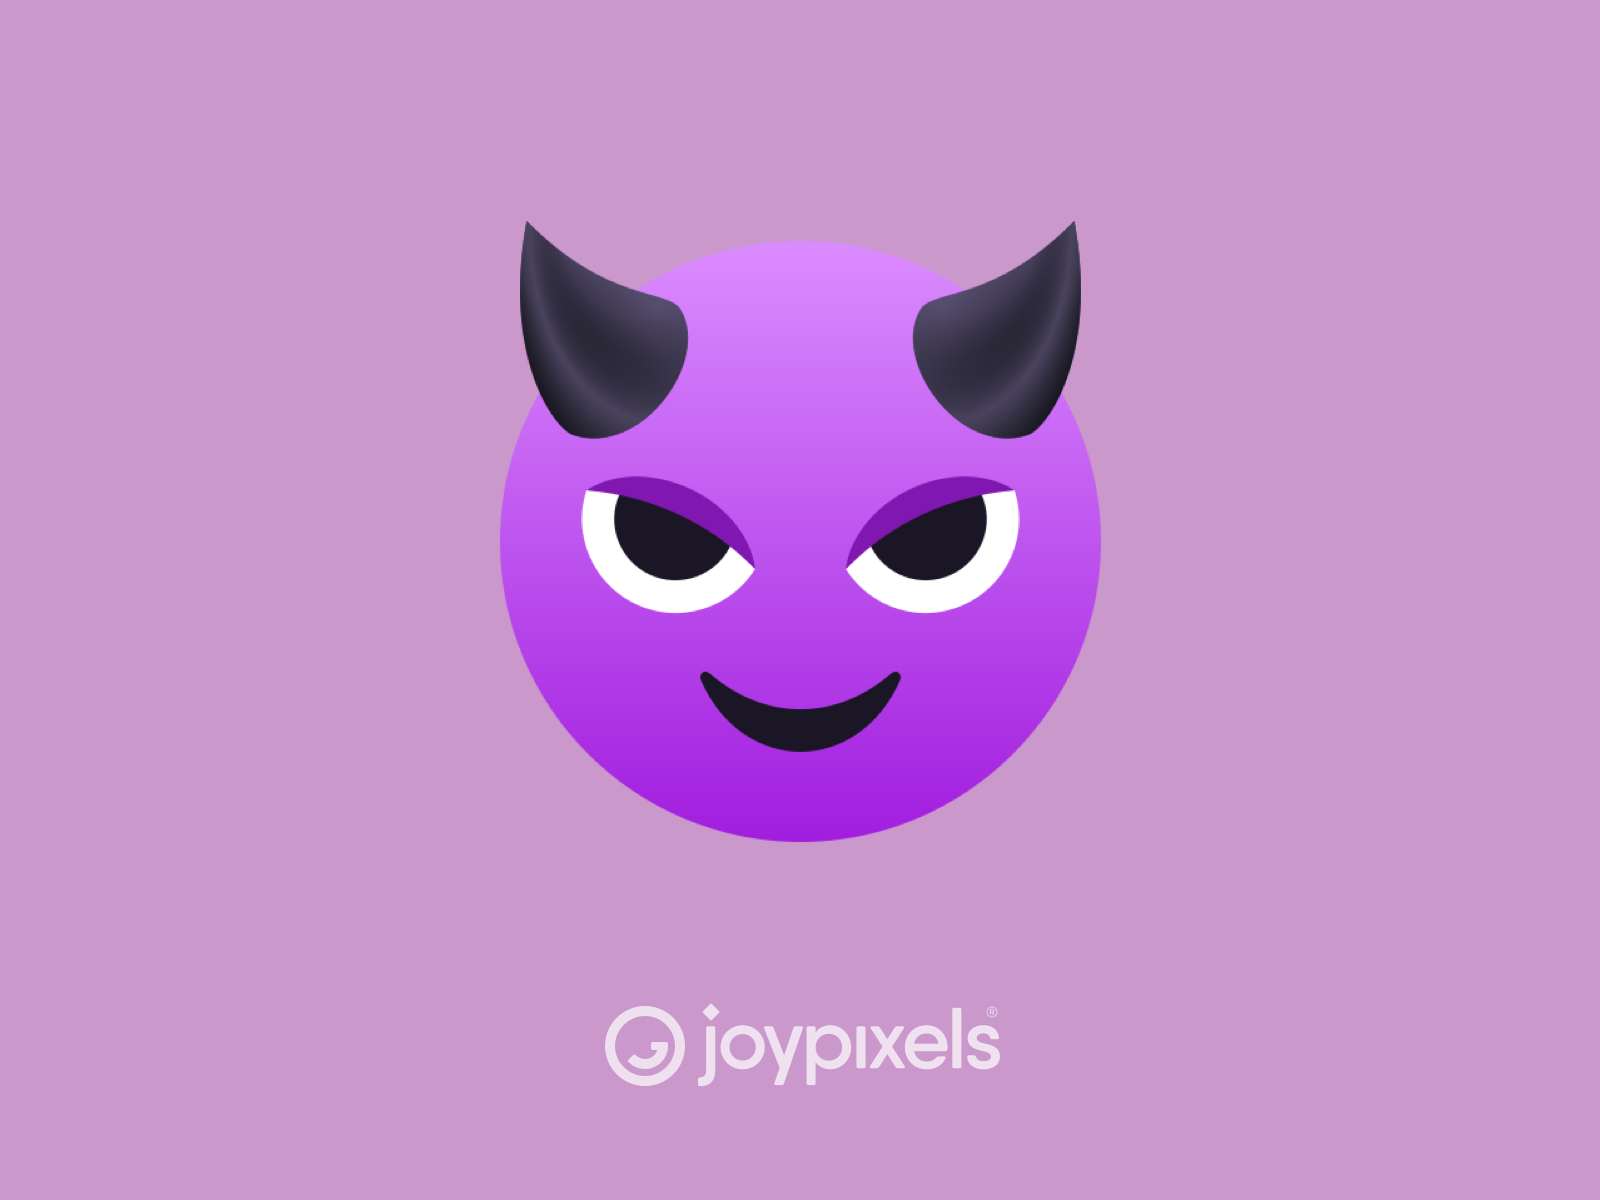 The JoyPixels Smiling Face with Horns Emoji 5.5